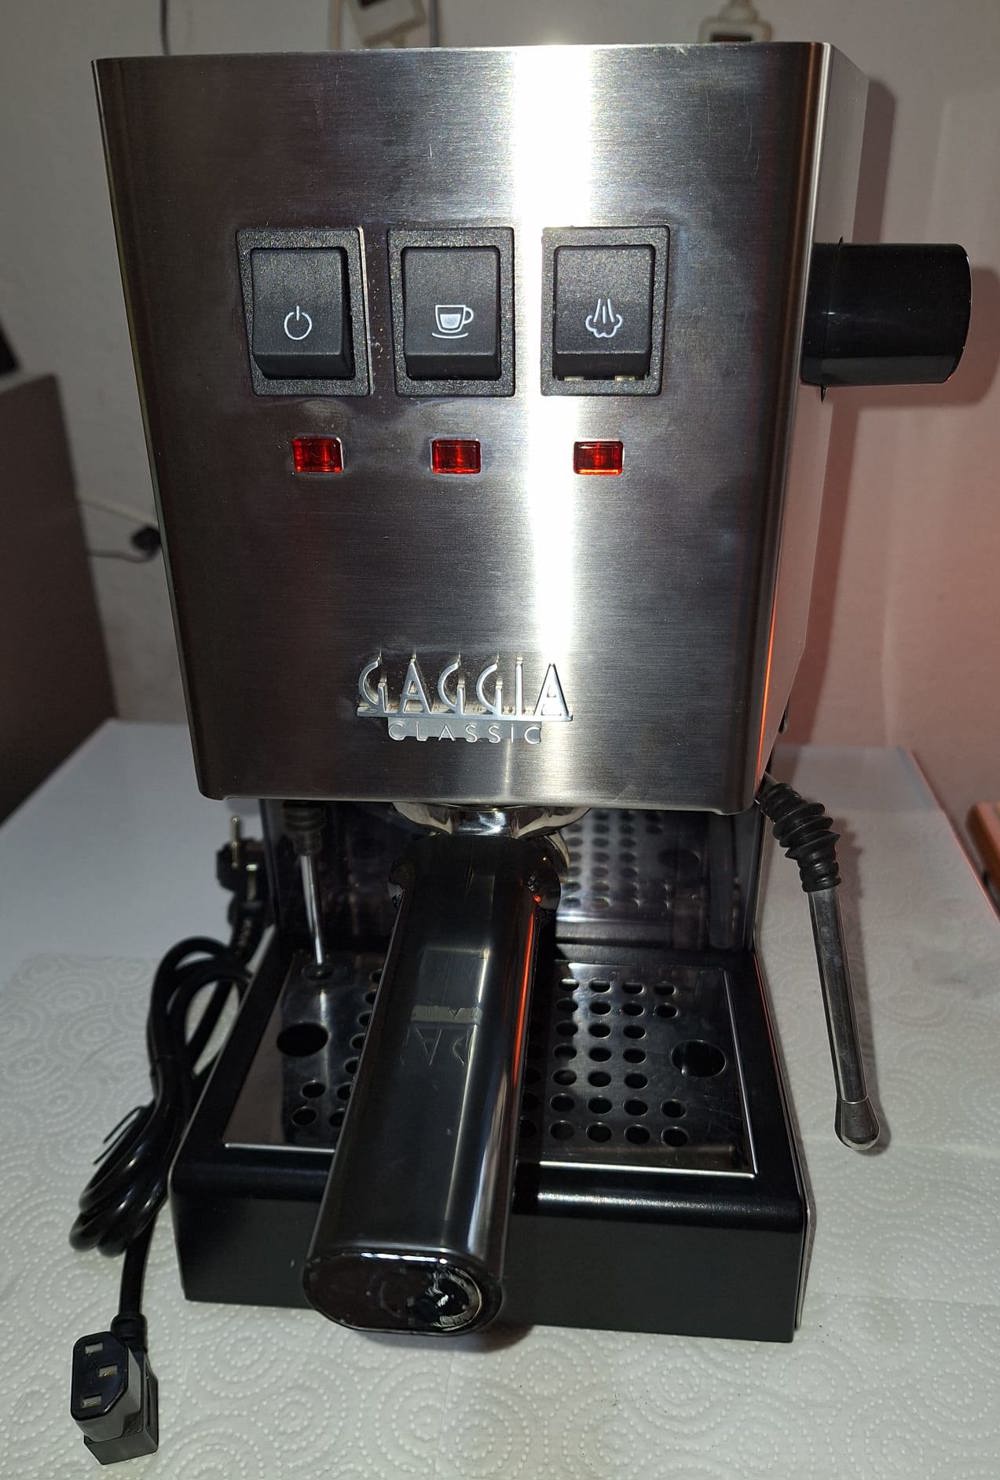 Gaggia Classic Manual Espresso Machine